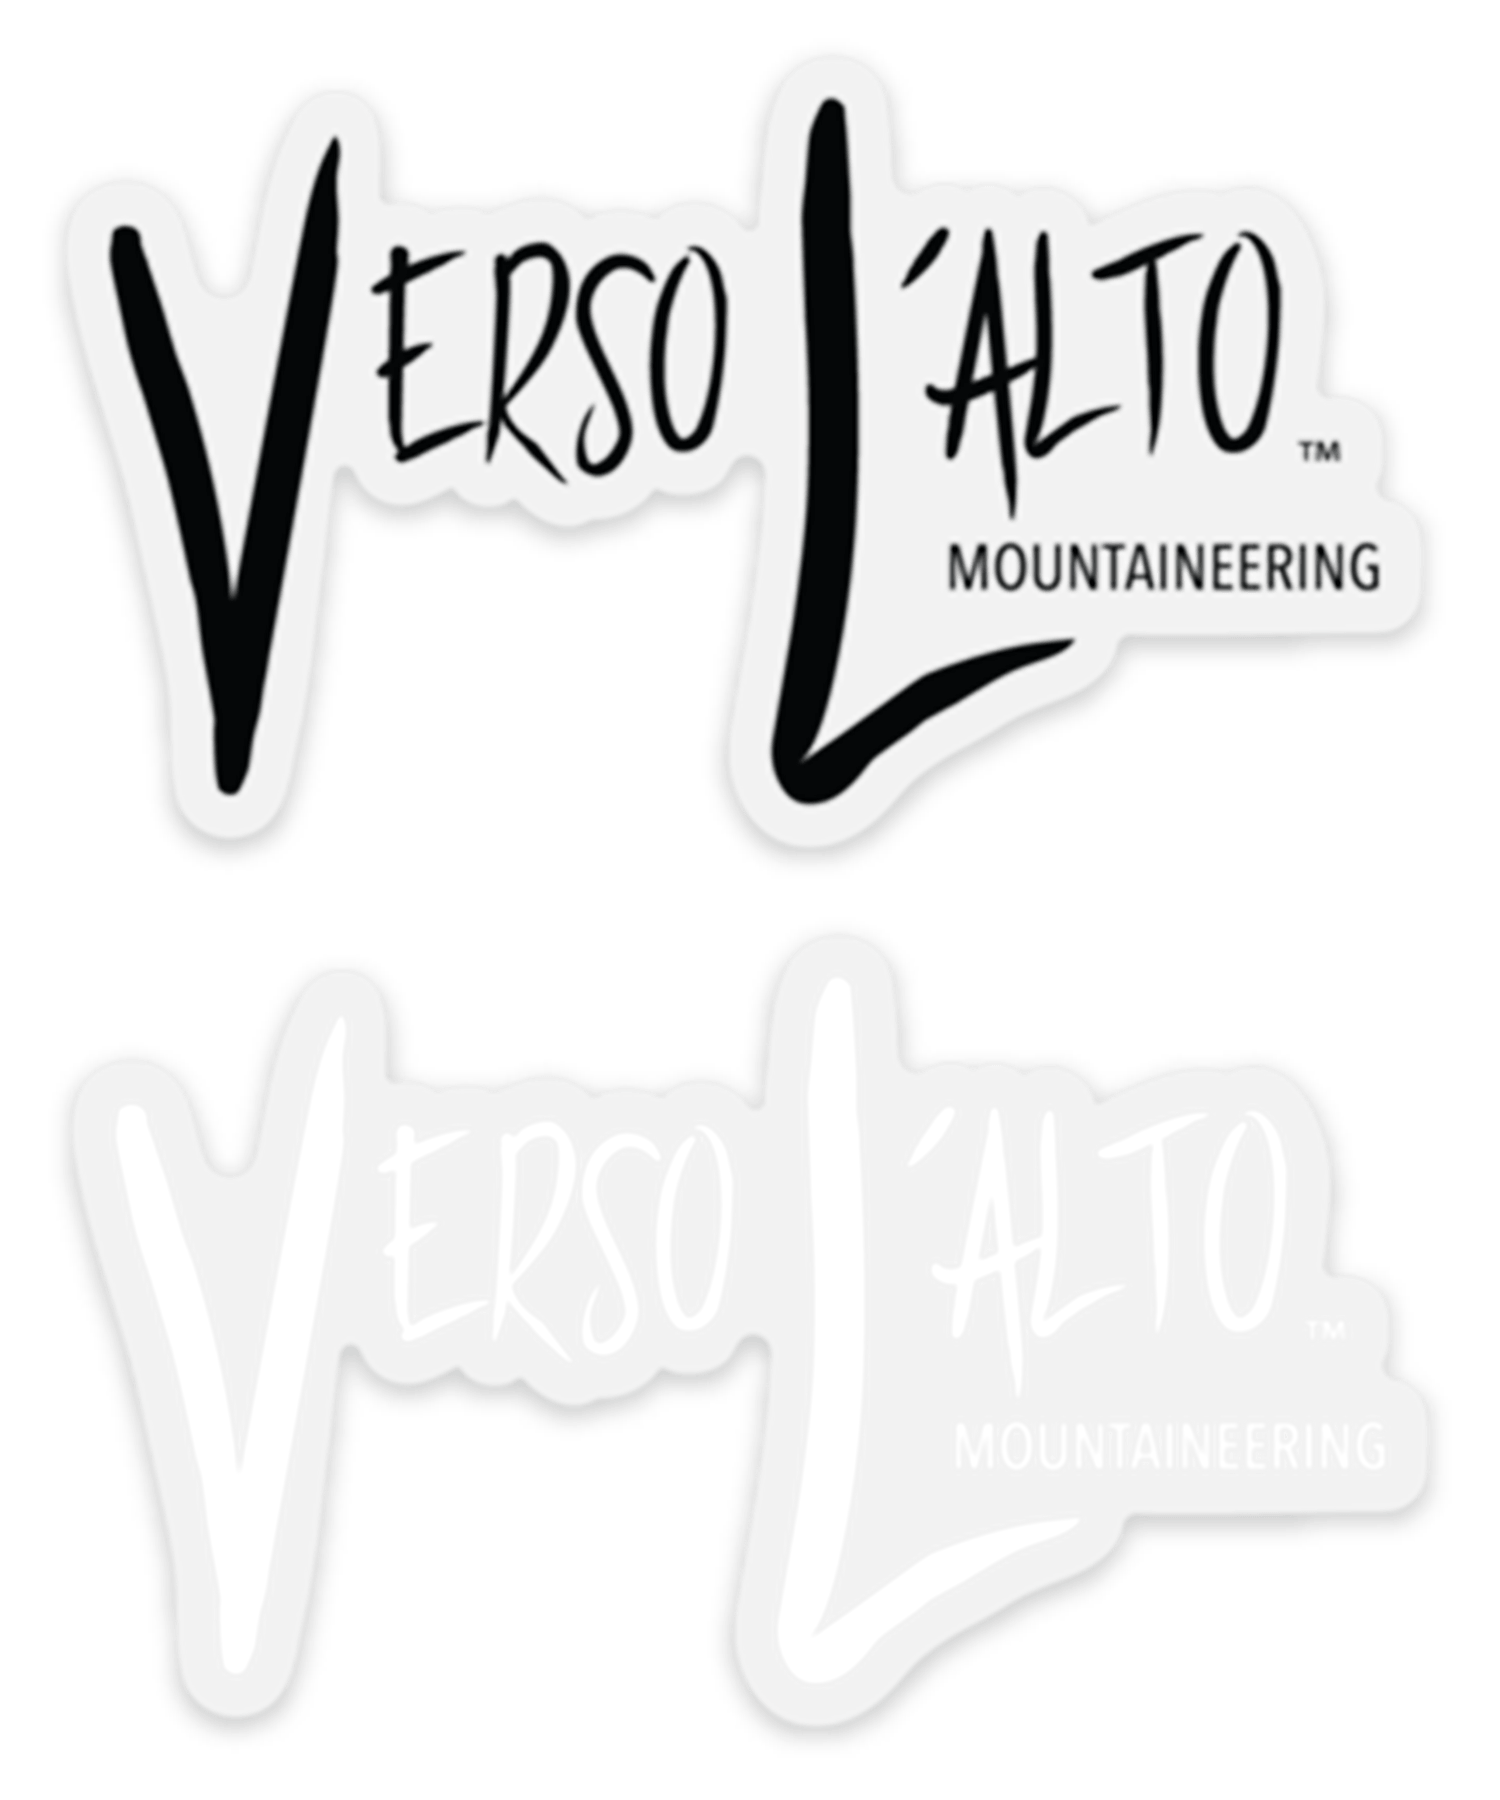 Mountaineering Logo - Verso L'Alto Mountaineering Logo Sticker Pack – VL Mountaineering™